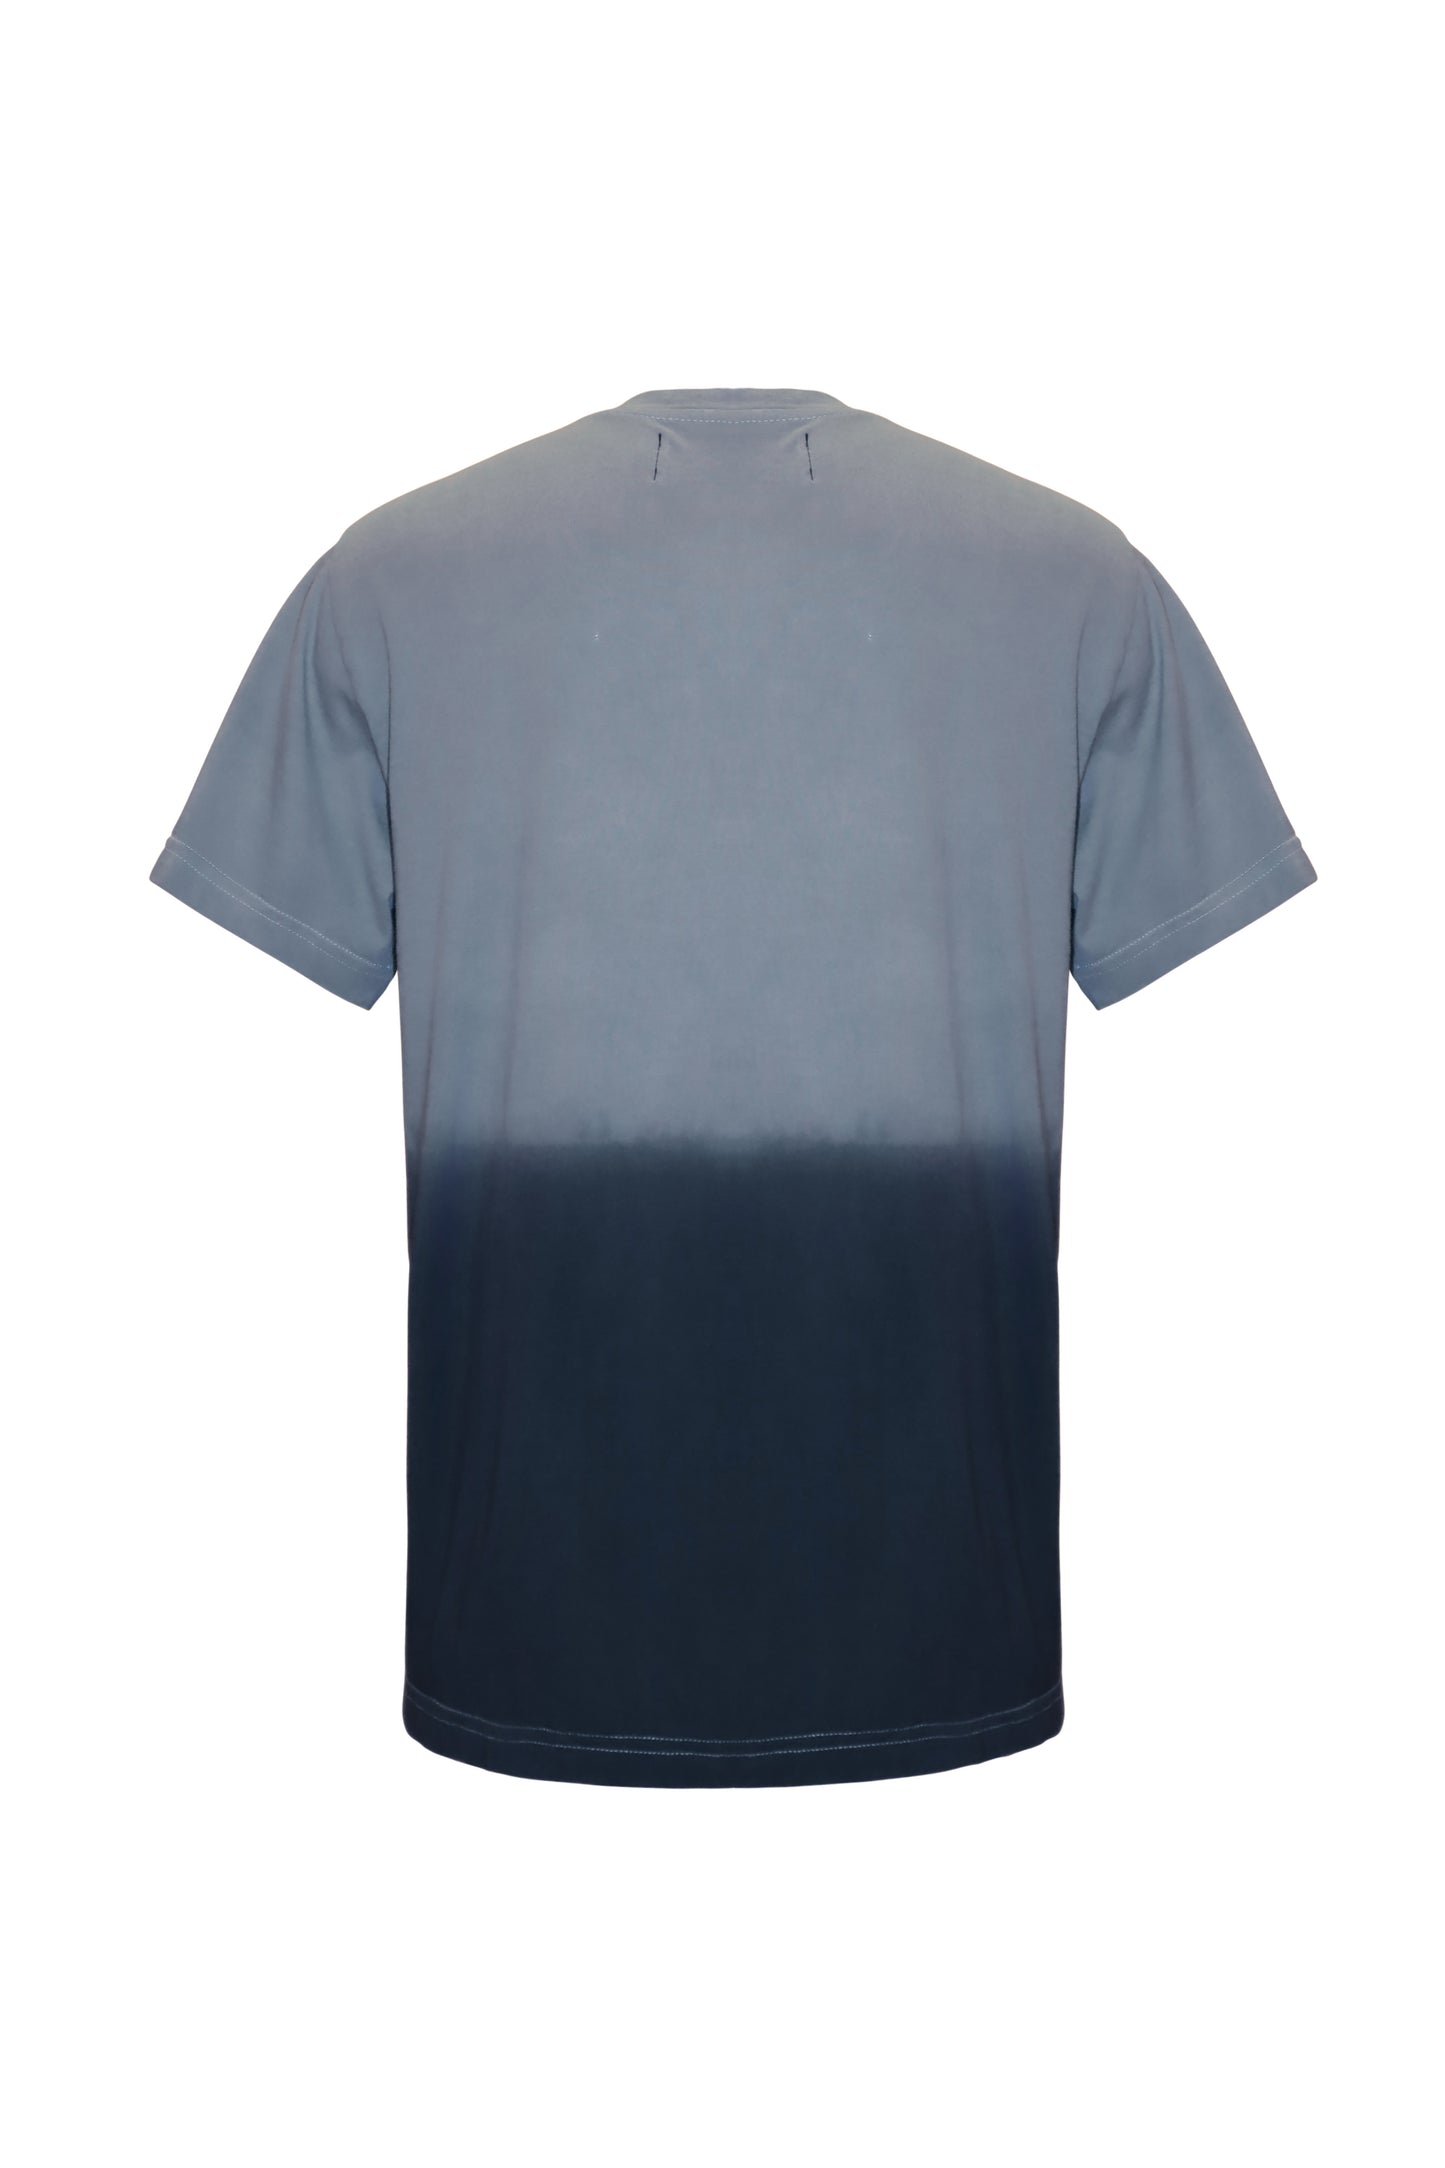 AO x TUMO Blue Gradient T-shirt